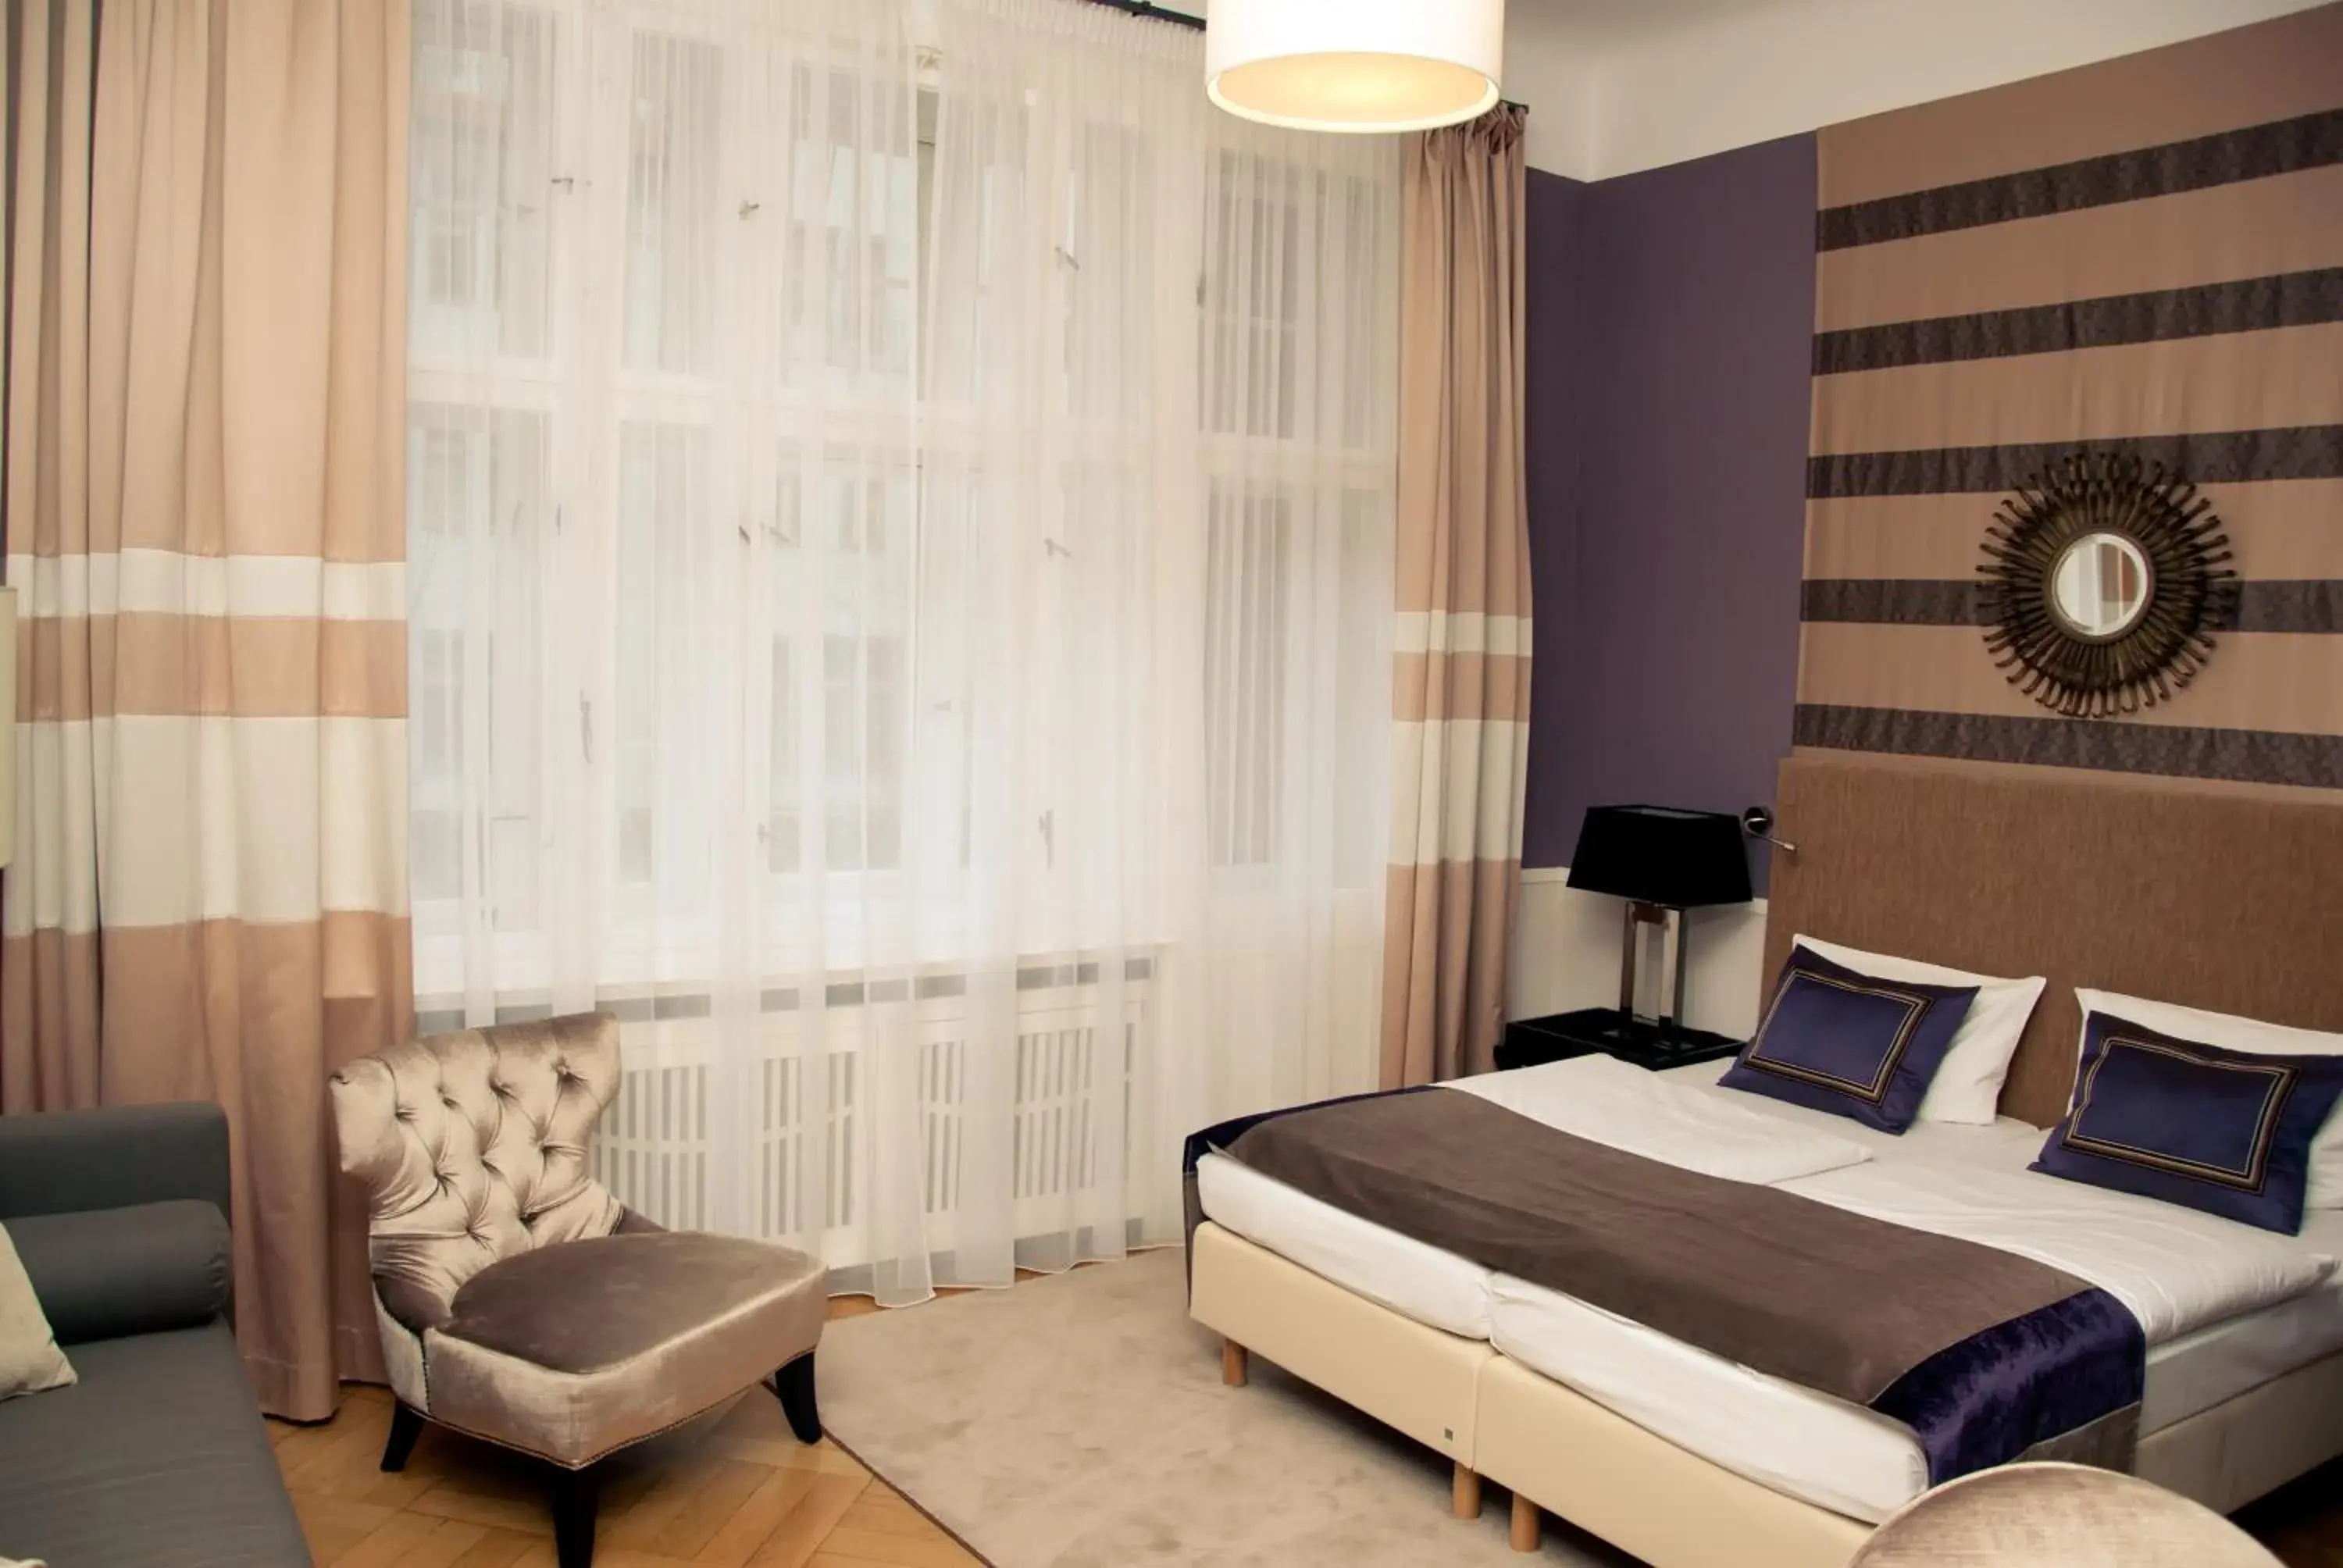 Photo of the whole room in Hotel Elba am Kurfürstendamm - Design Chambers